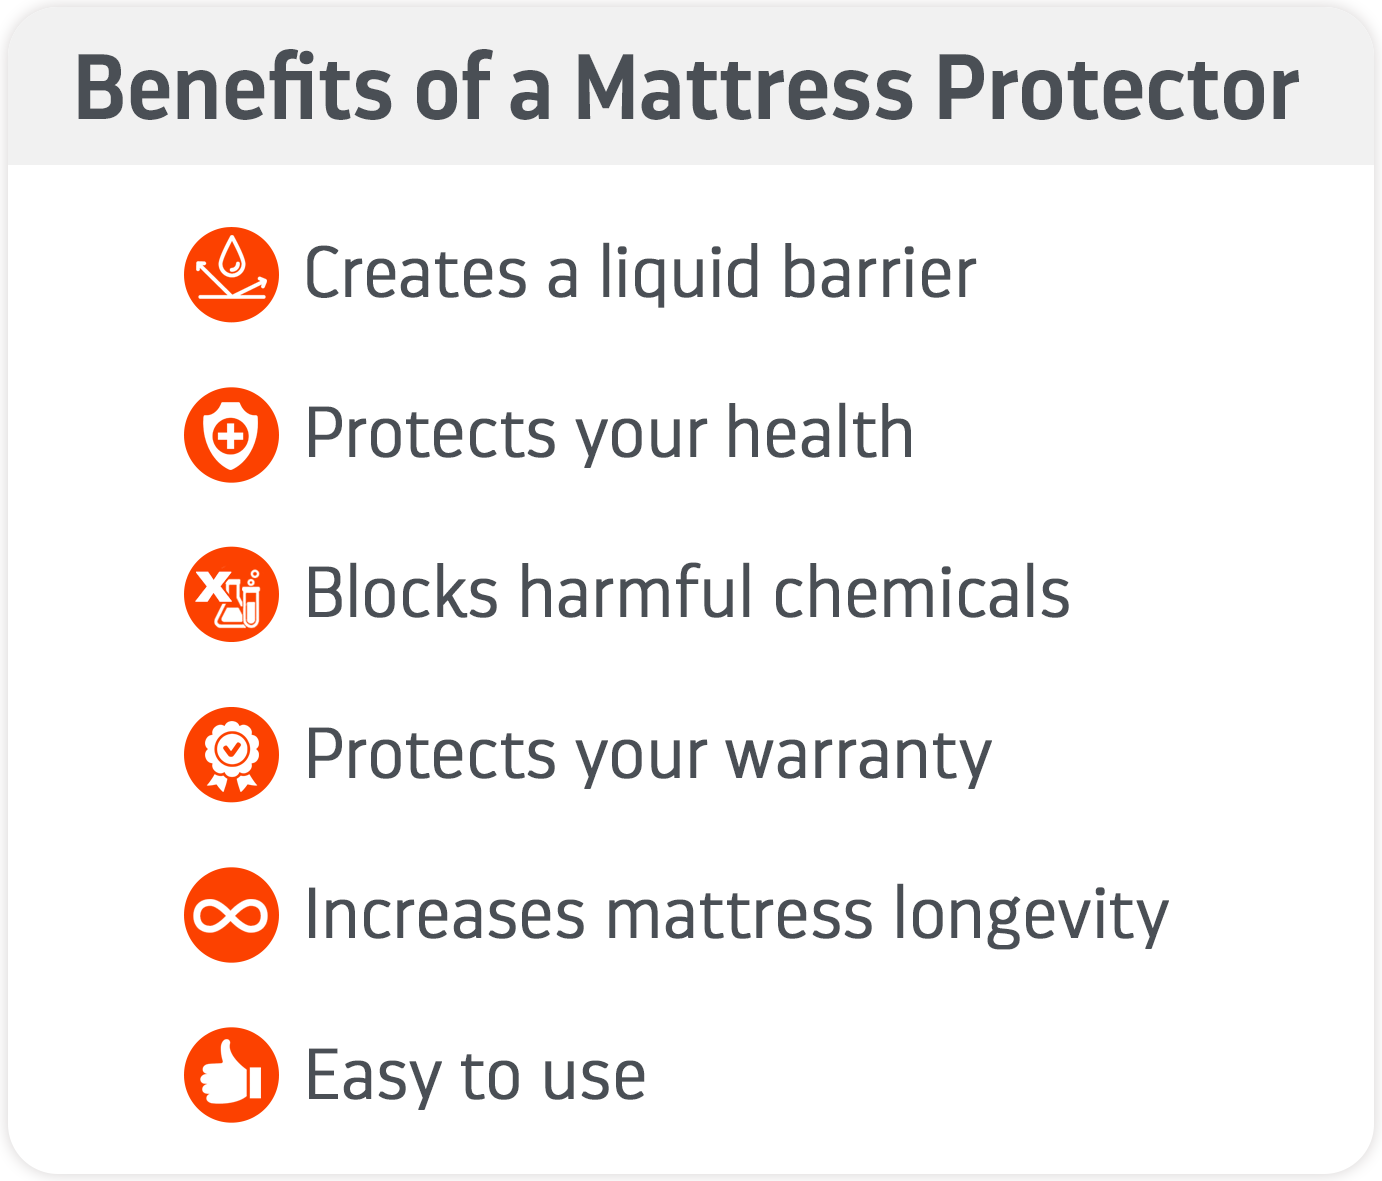 Benefits of a Mattress Protector